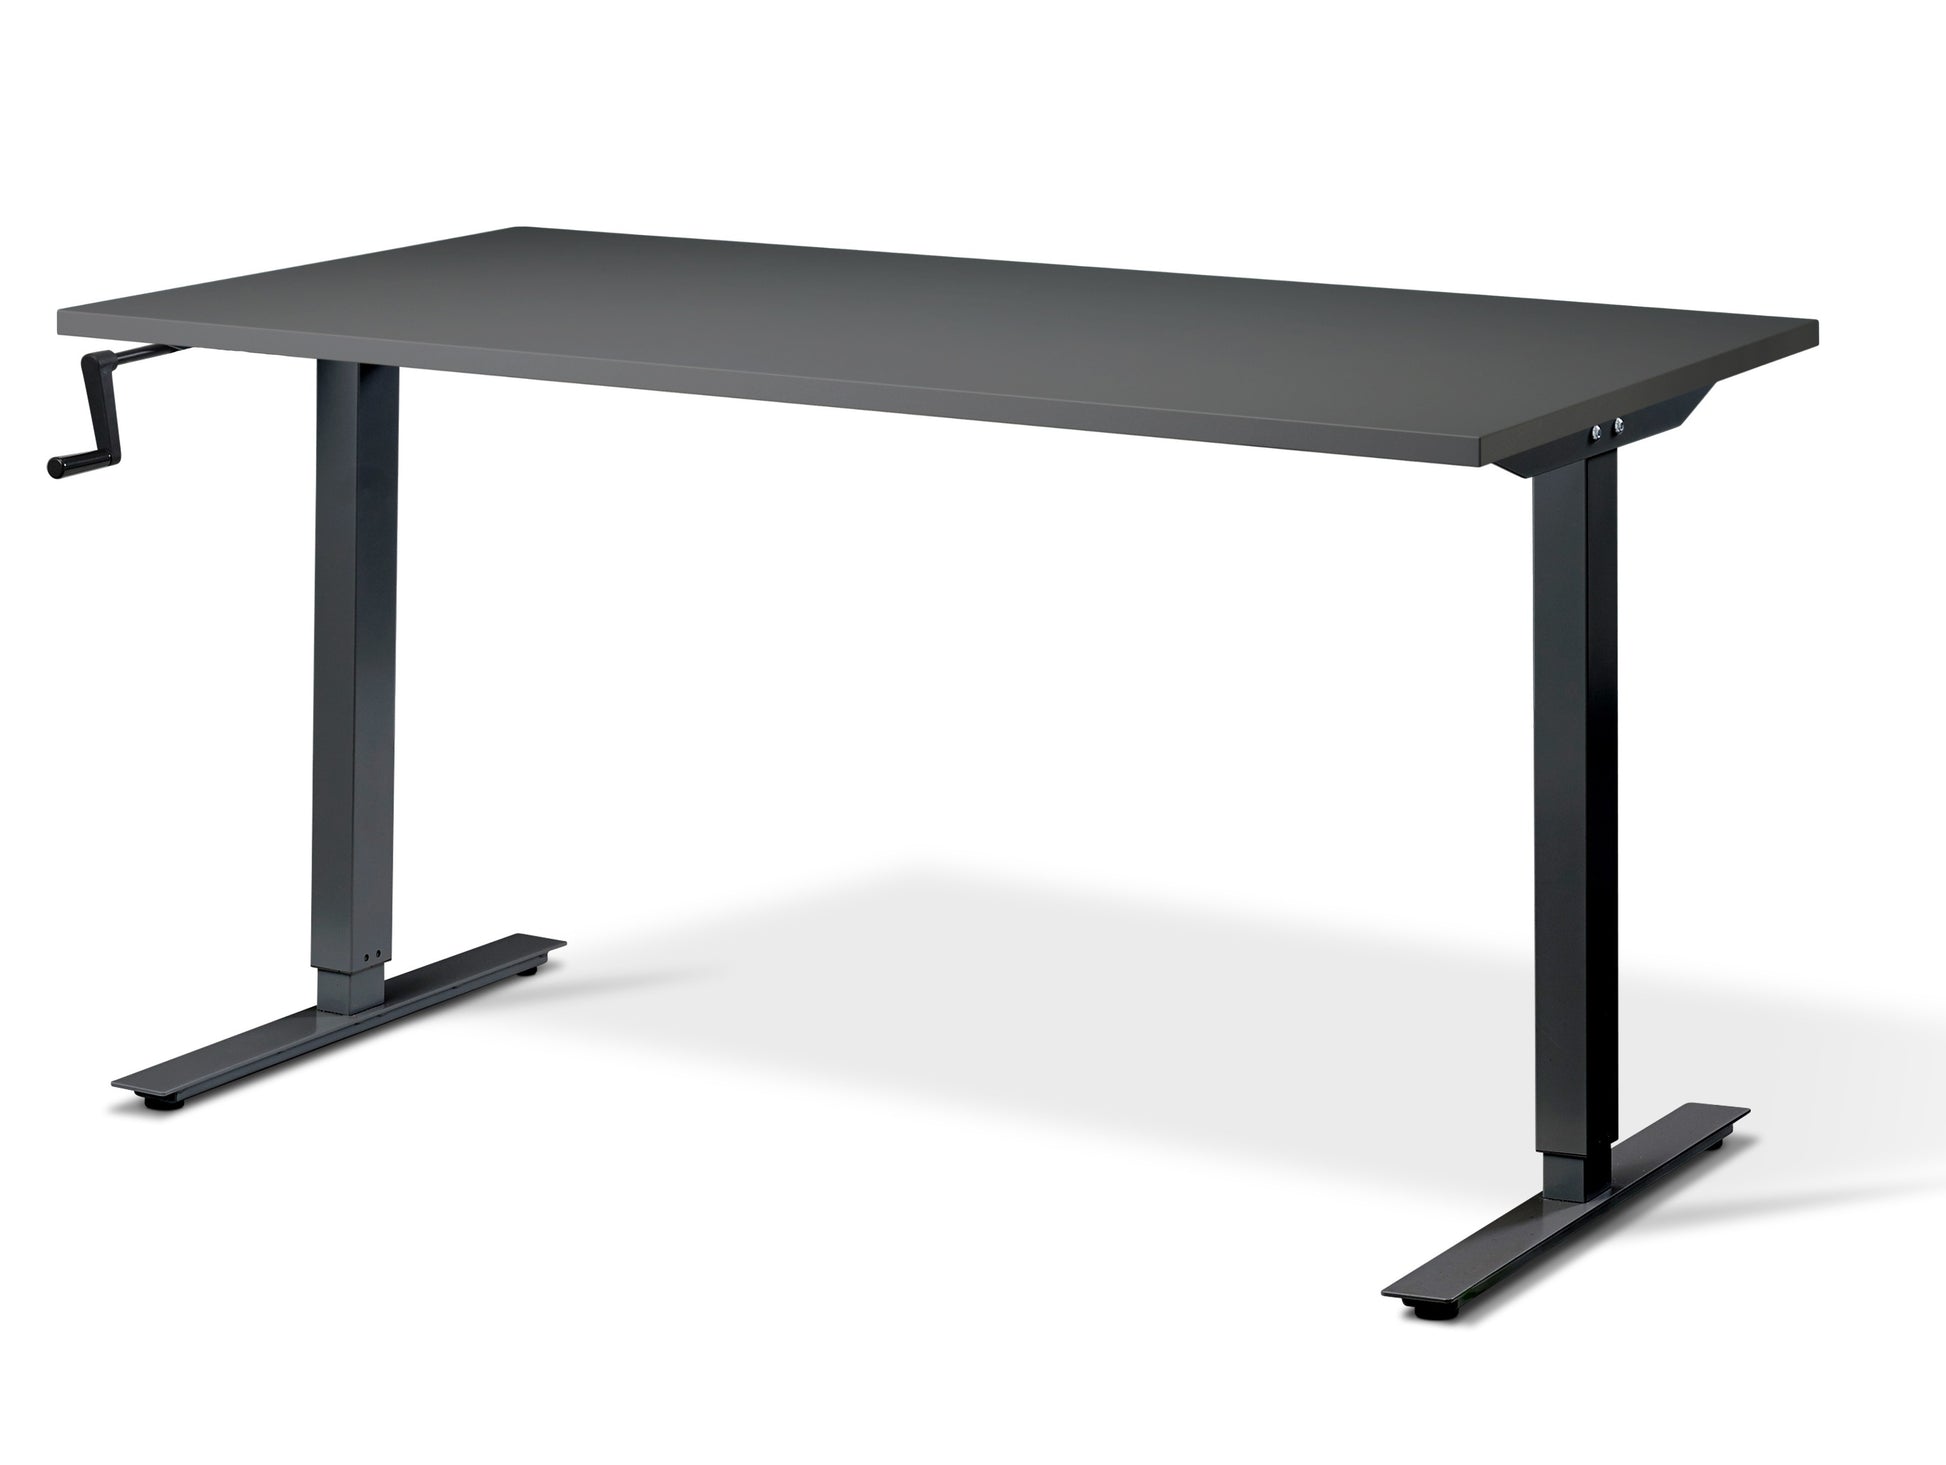 manual height adjustable standing desk